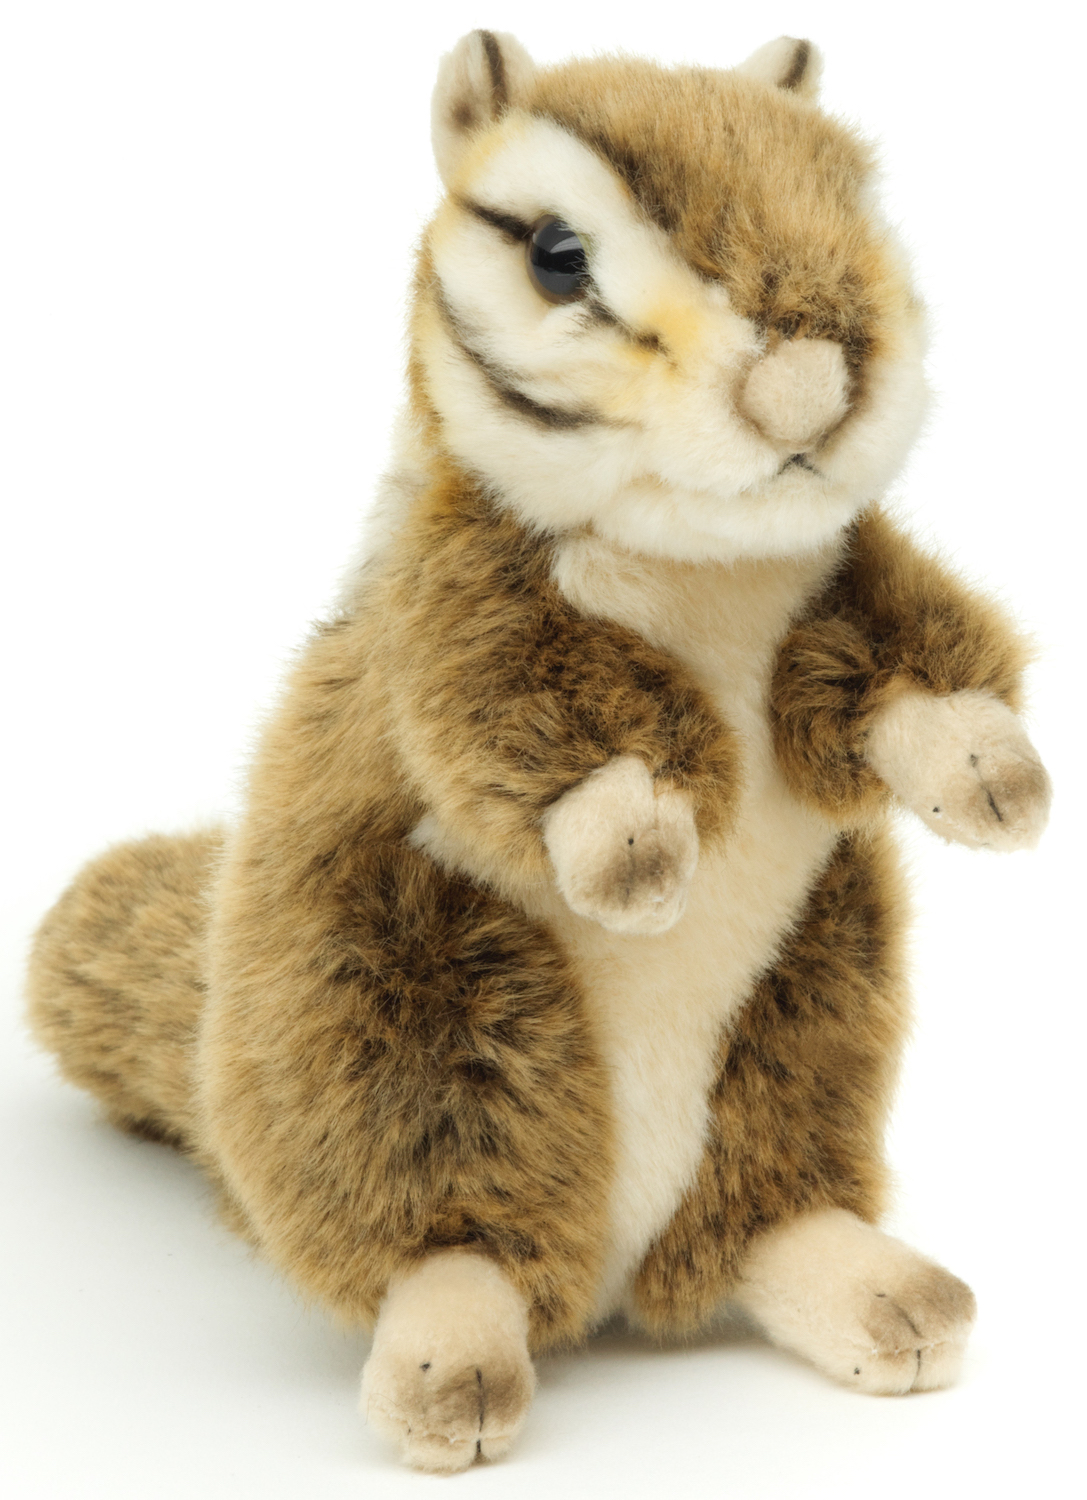  Chipmunk, standing - 18 cm (height) - plush rodent, chipmunk - soft toy, cuddly toy